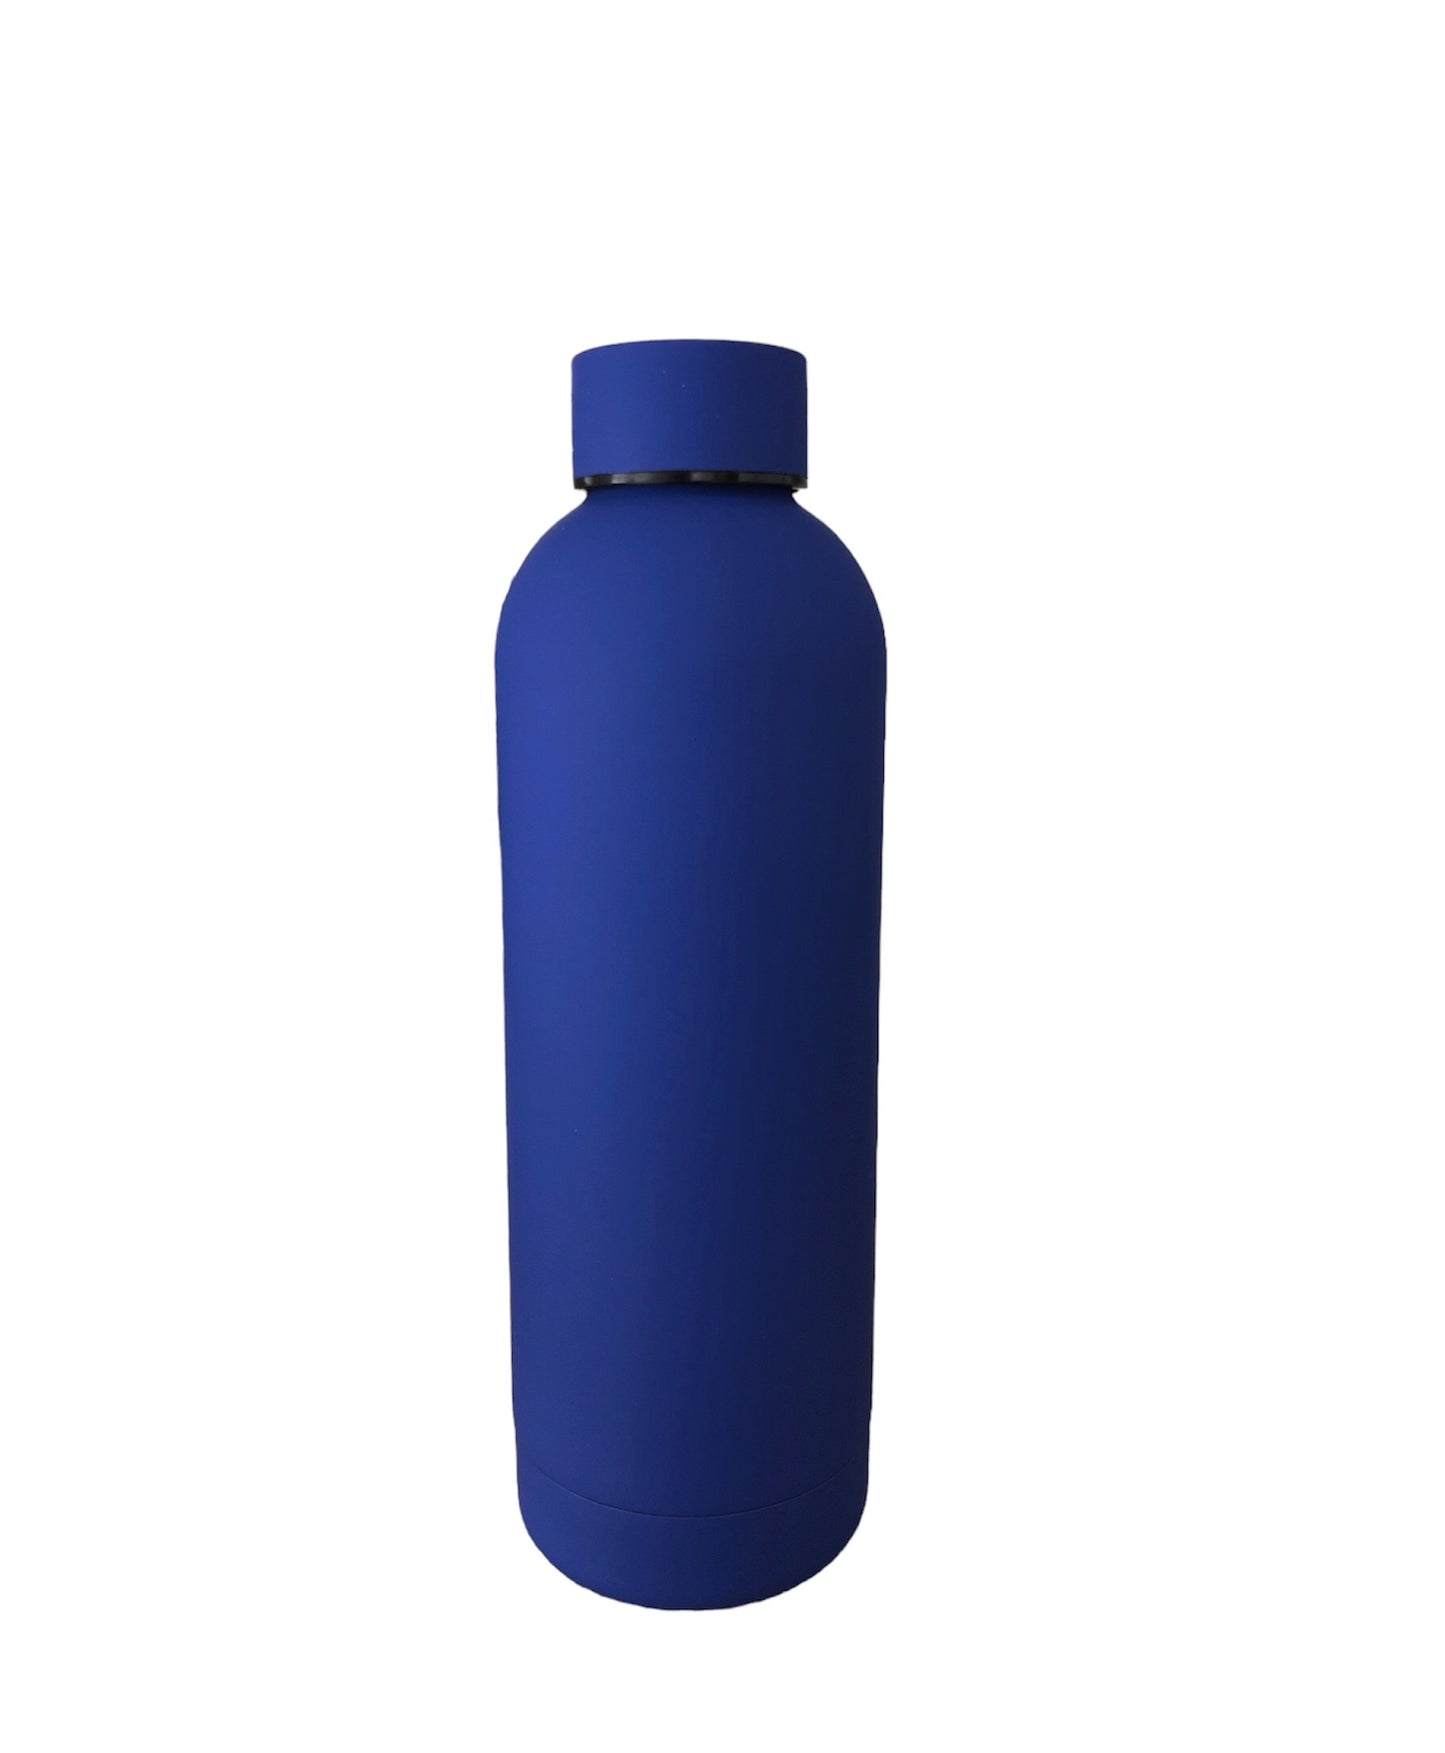 Matte water bottles